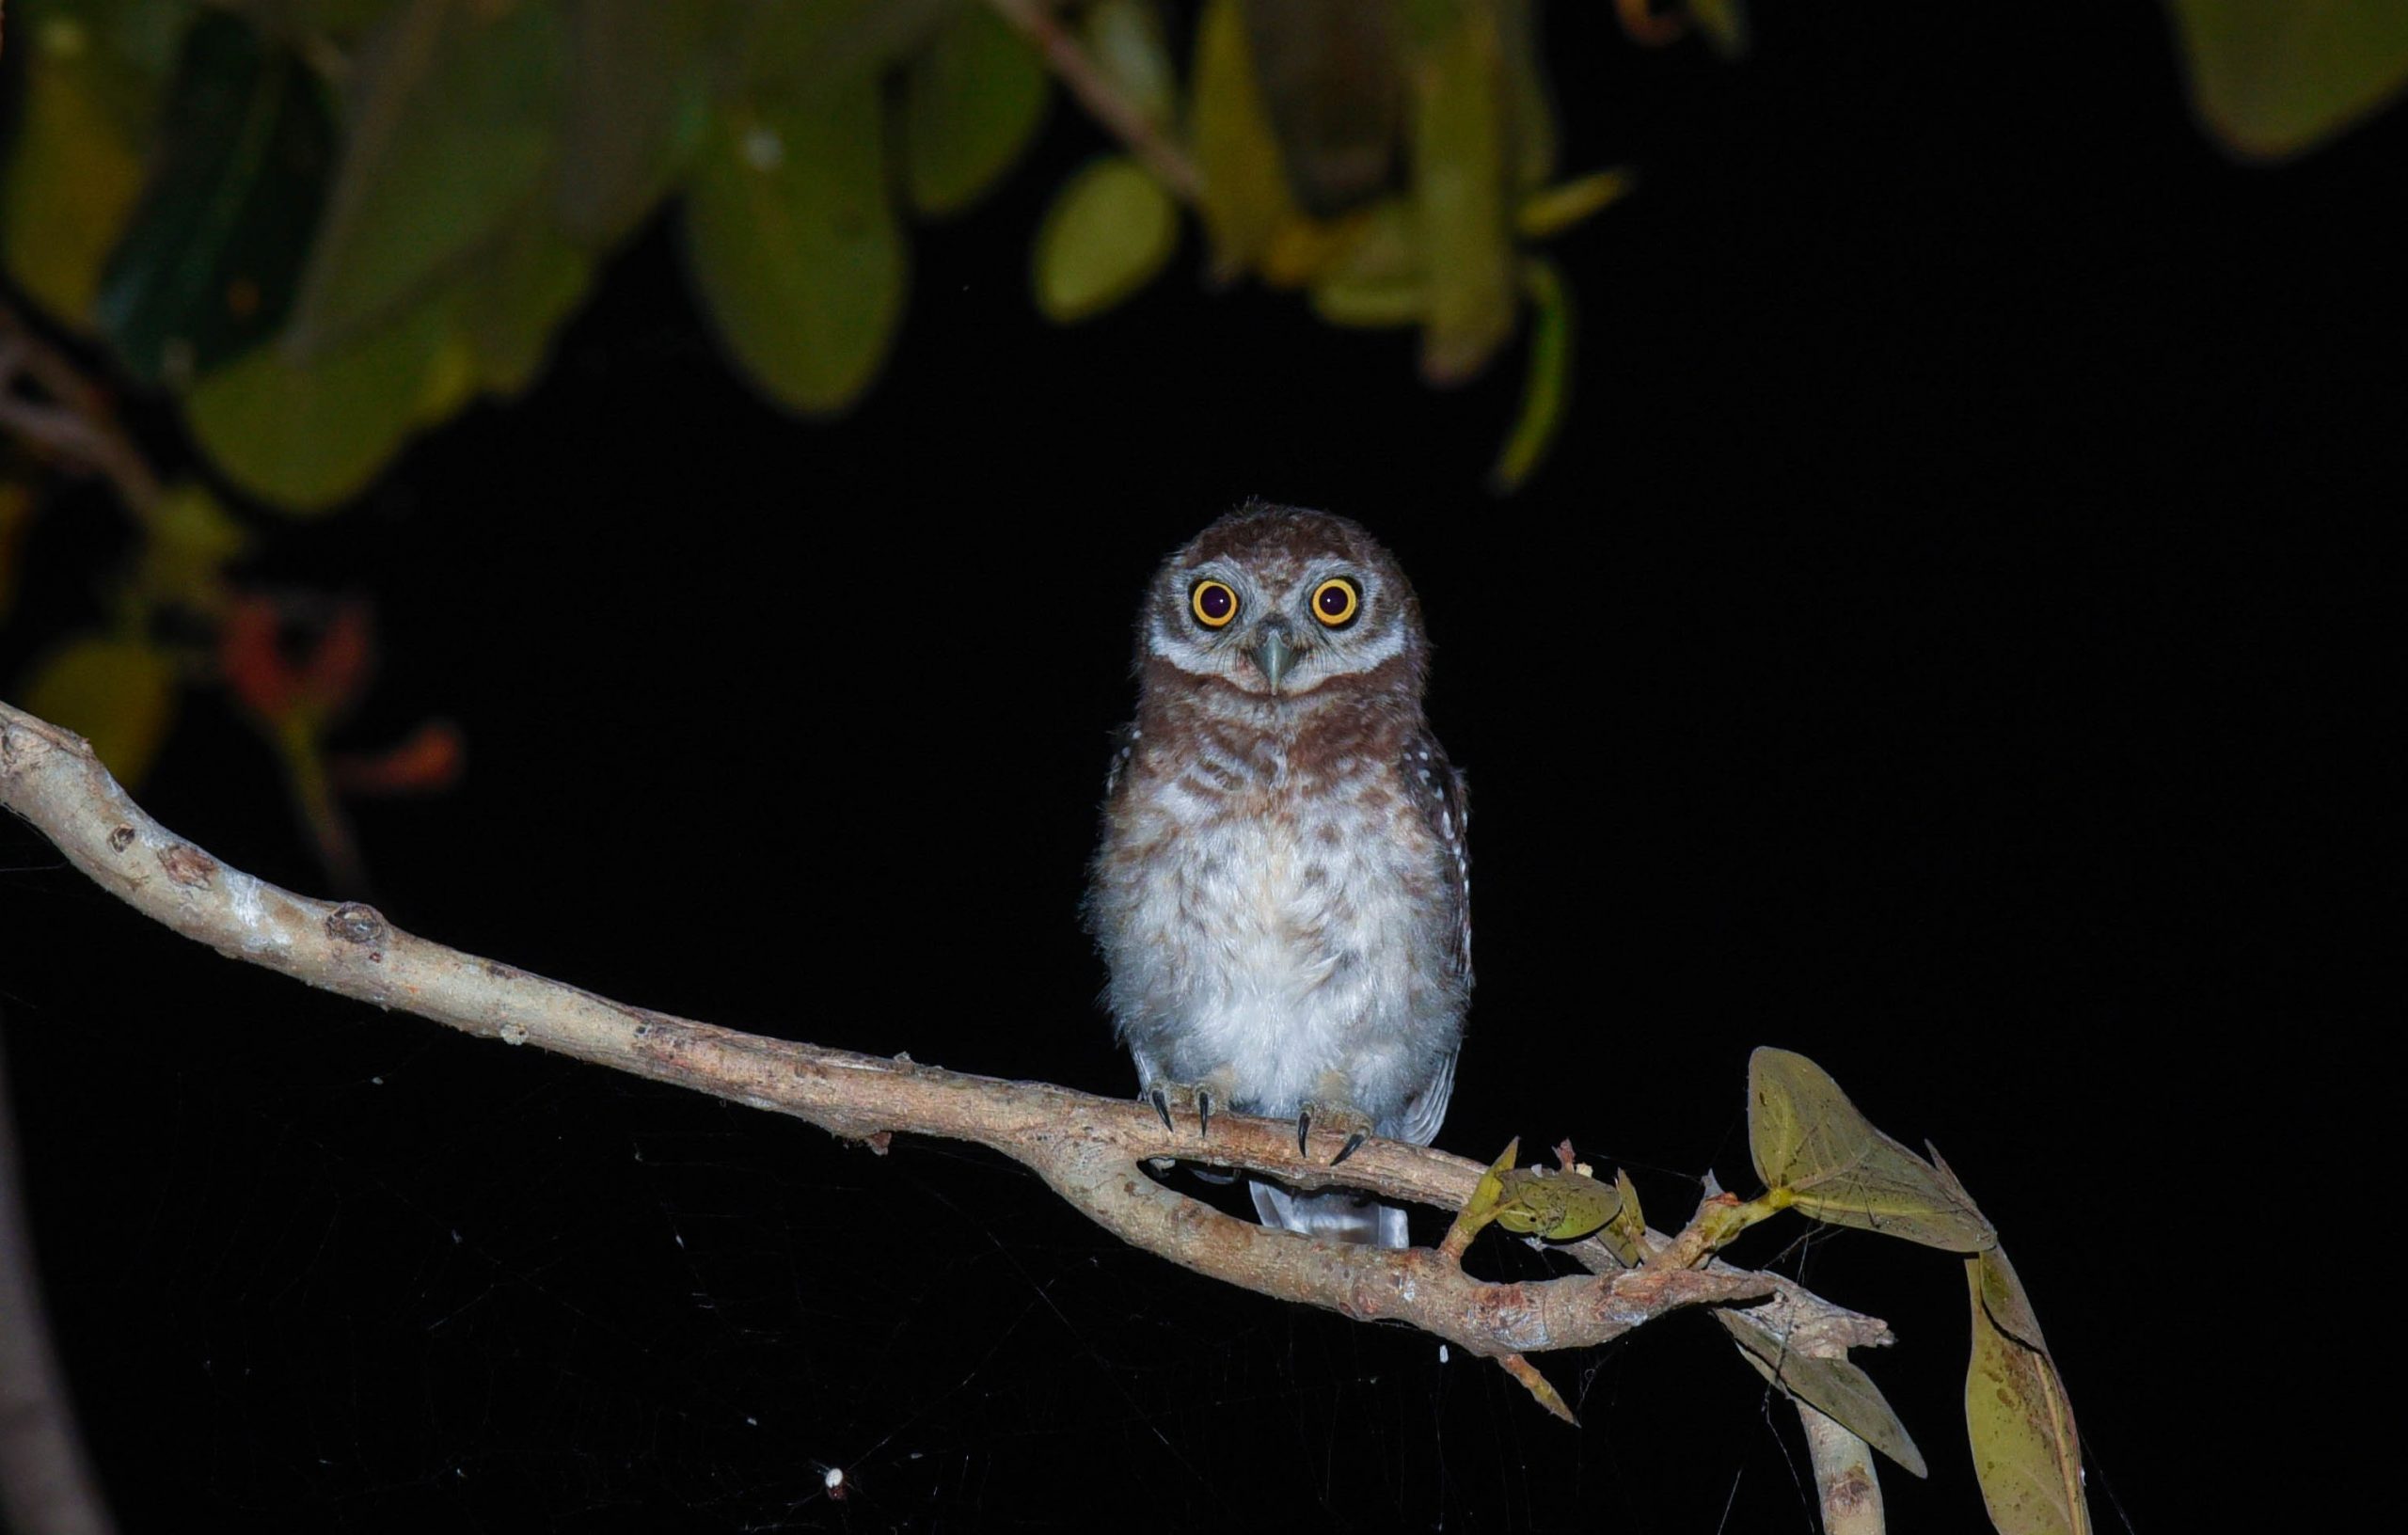 Owl on tree branch